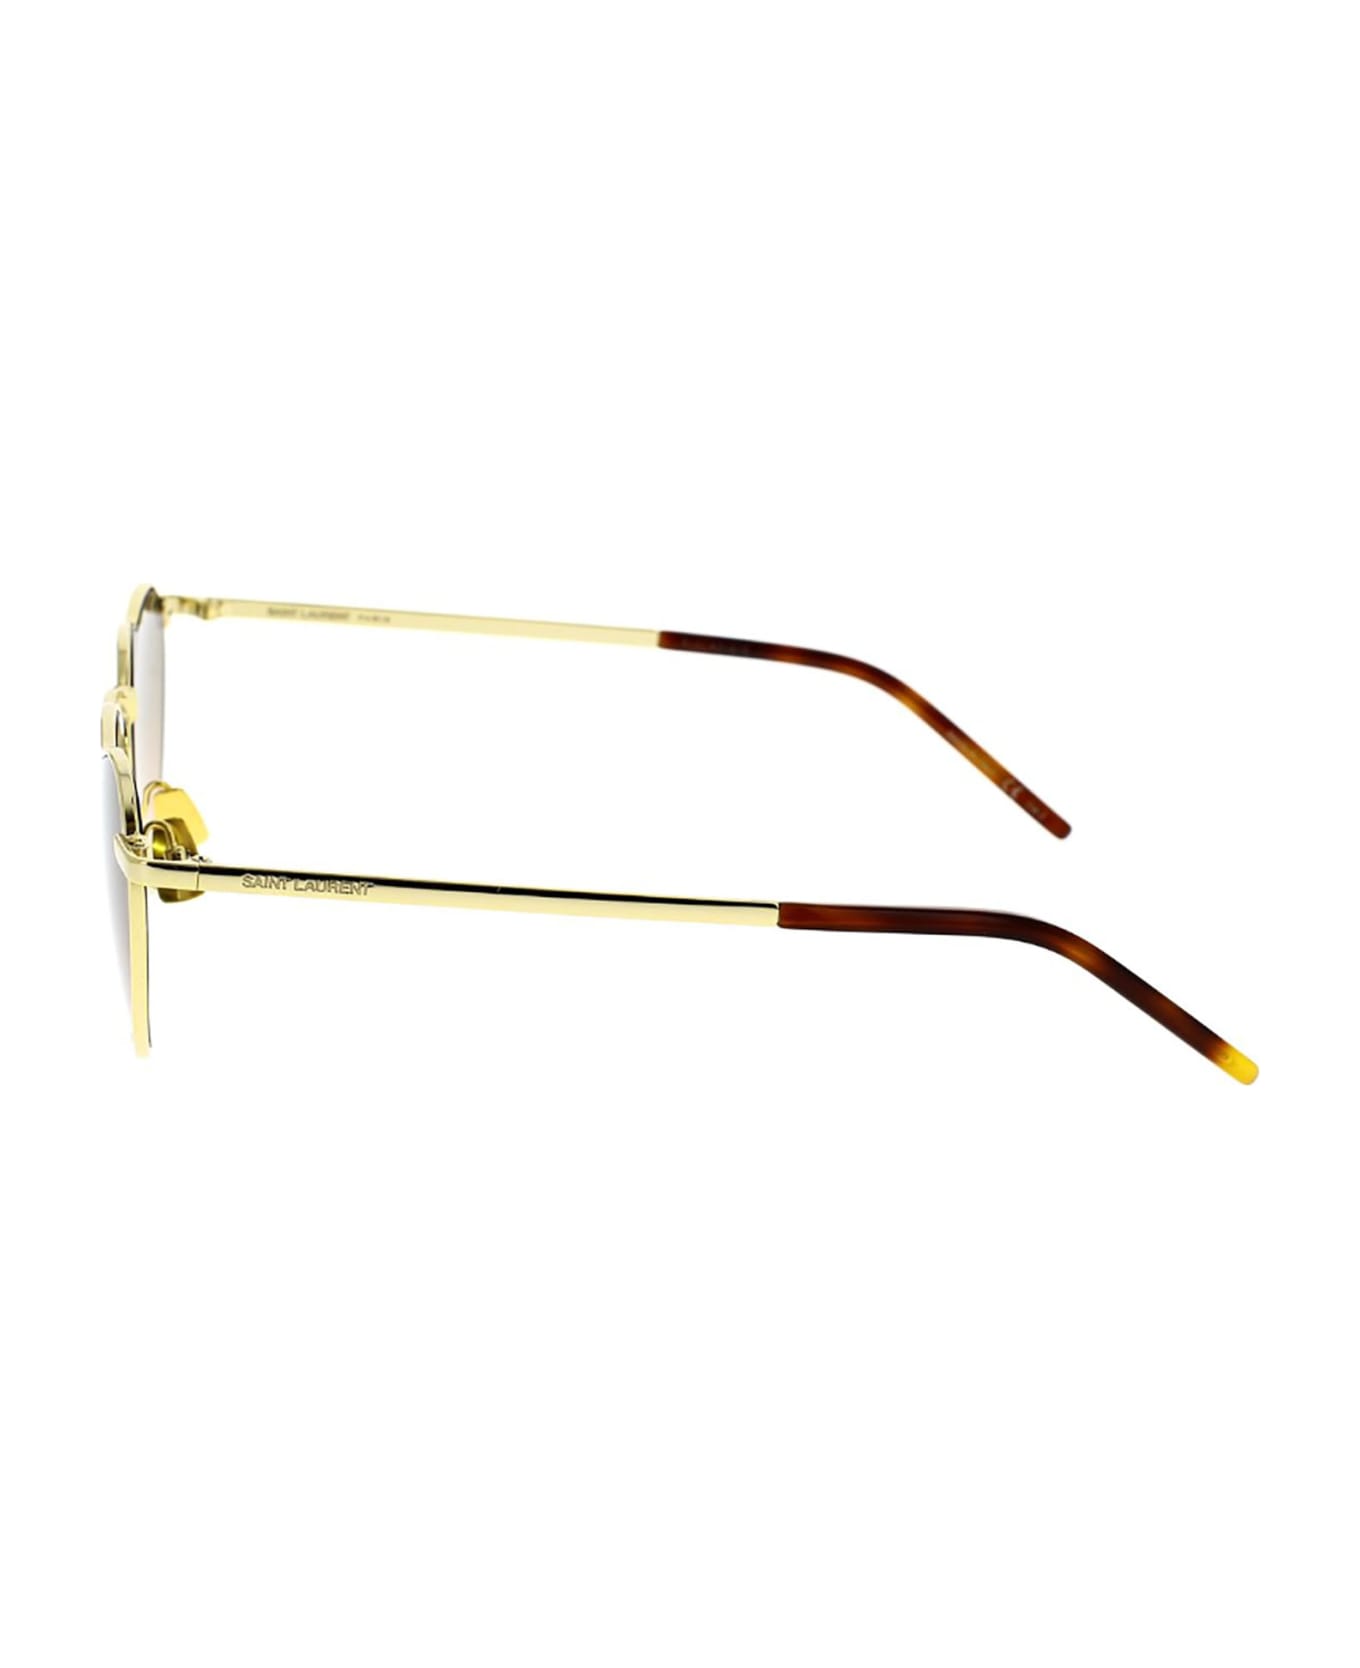 Saint Laurent Eyewear Sl 301 Loulou Sunglasses - 015 gold gold brown サングラス